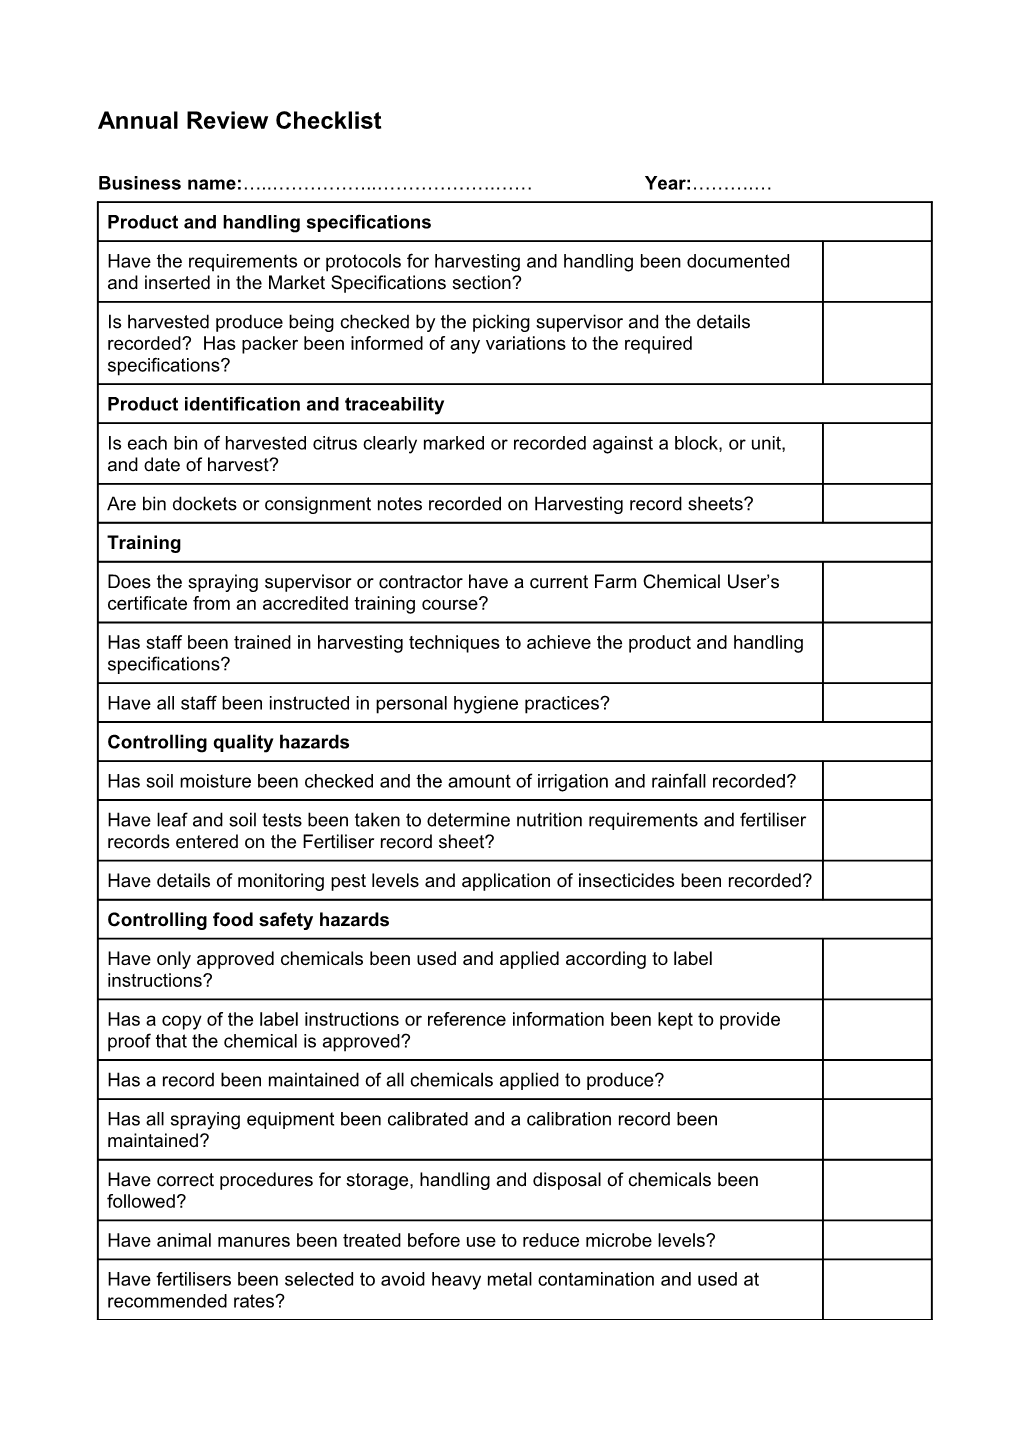 Annual Review Checklist